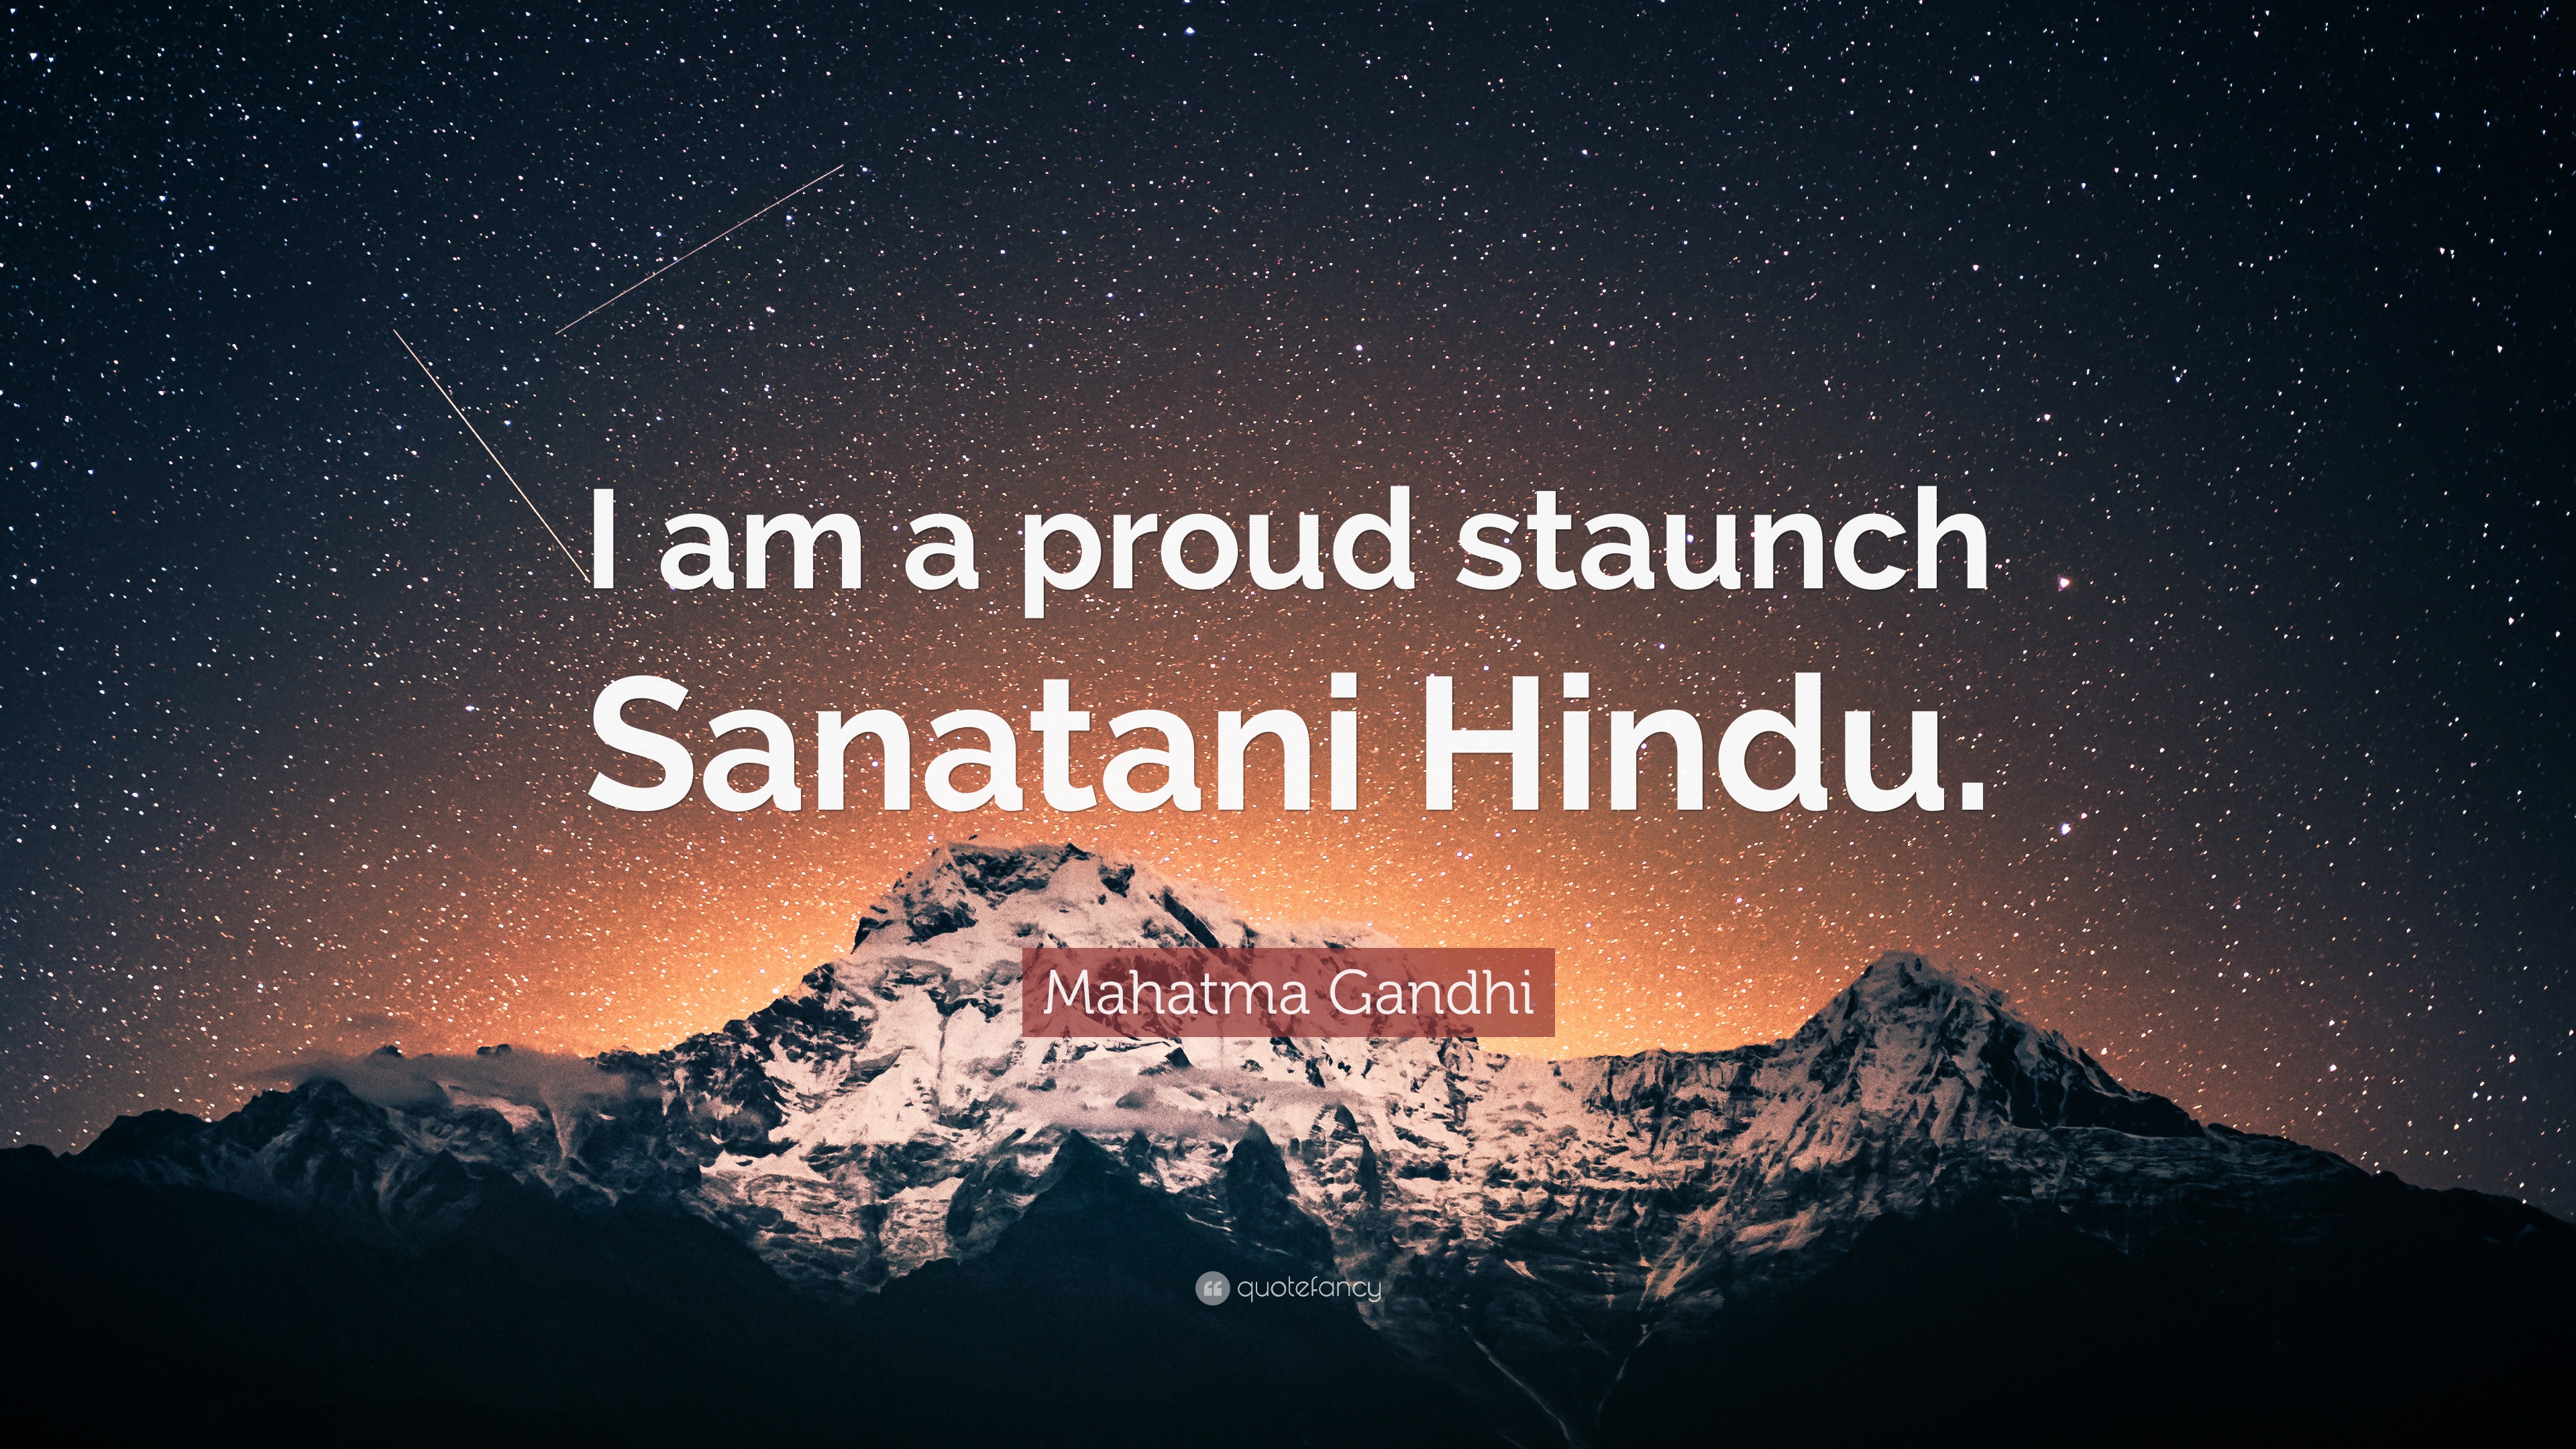 Mahatma Gandhi Quote: “I am a proud staunch Sanatani Hindu.”